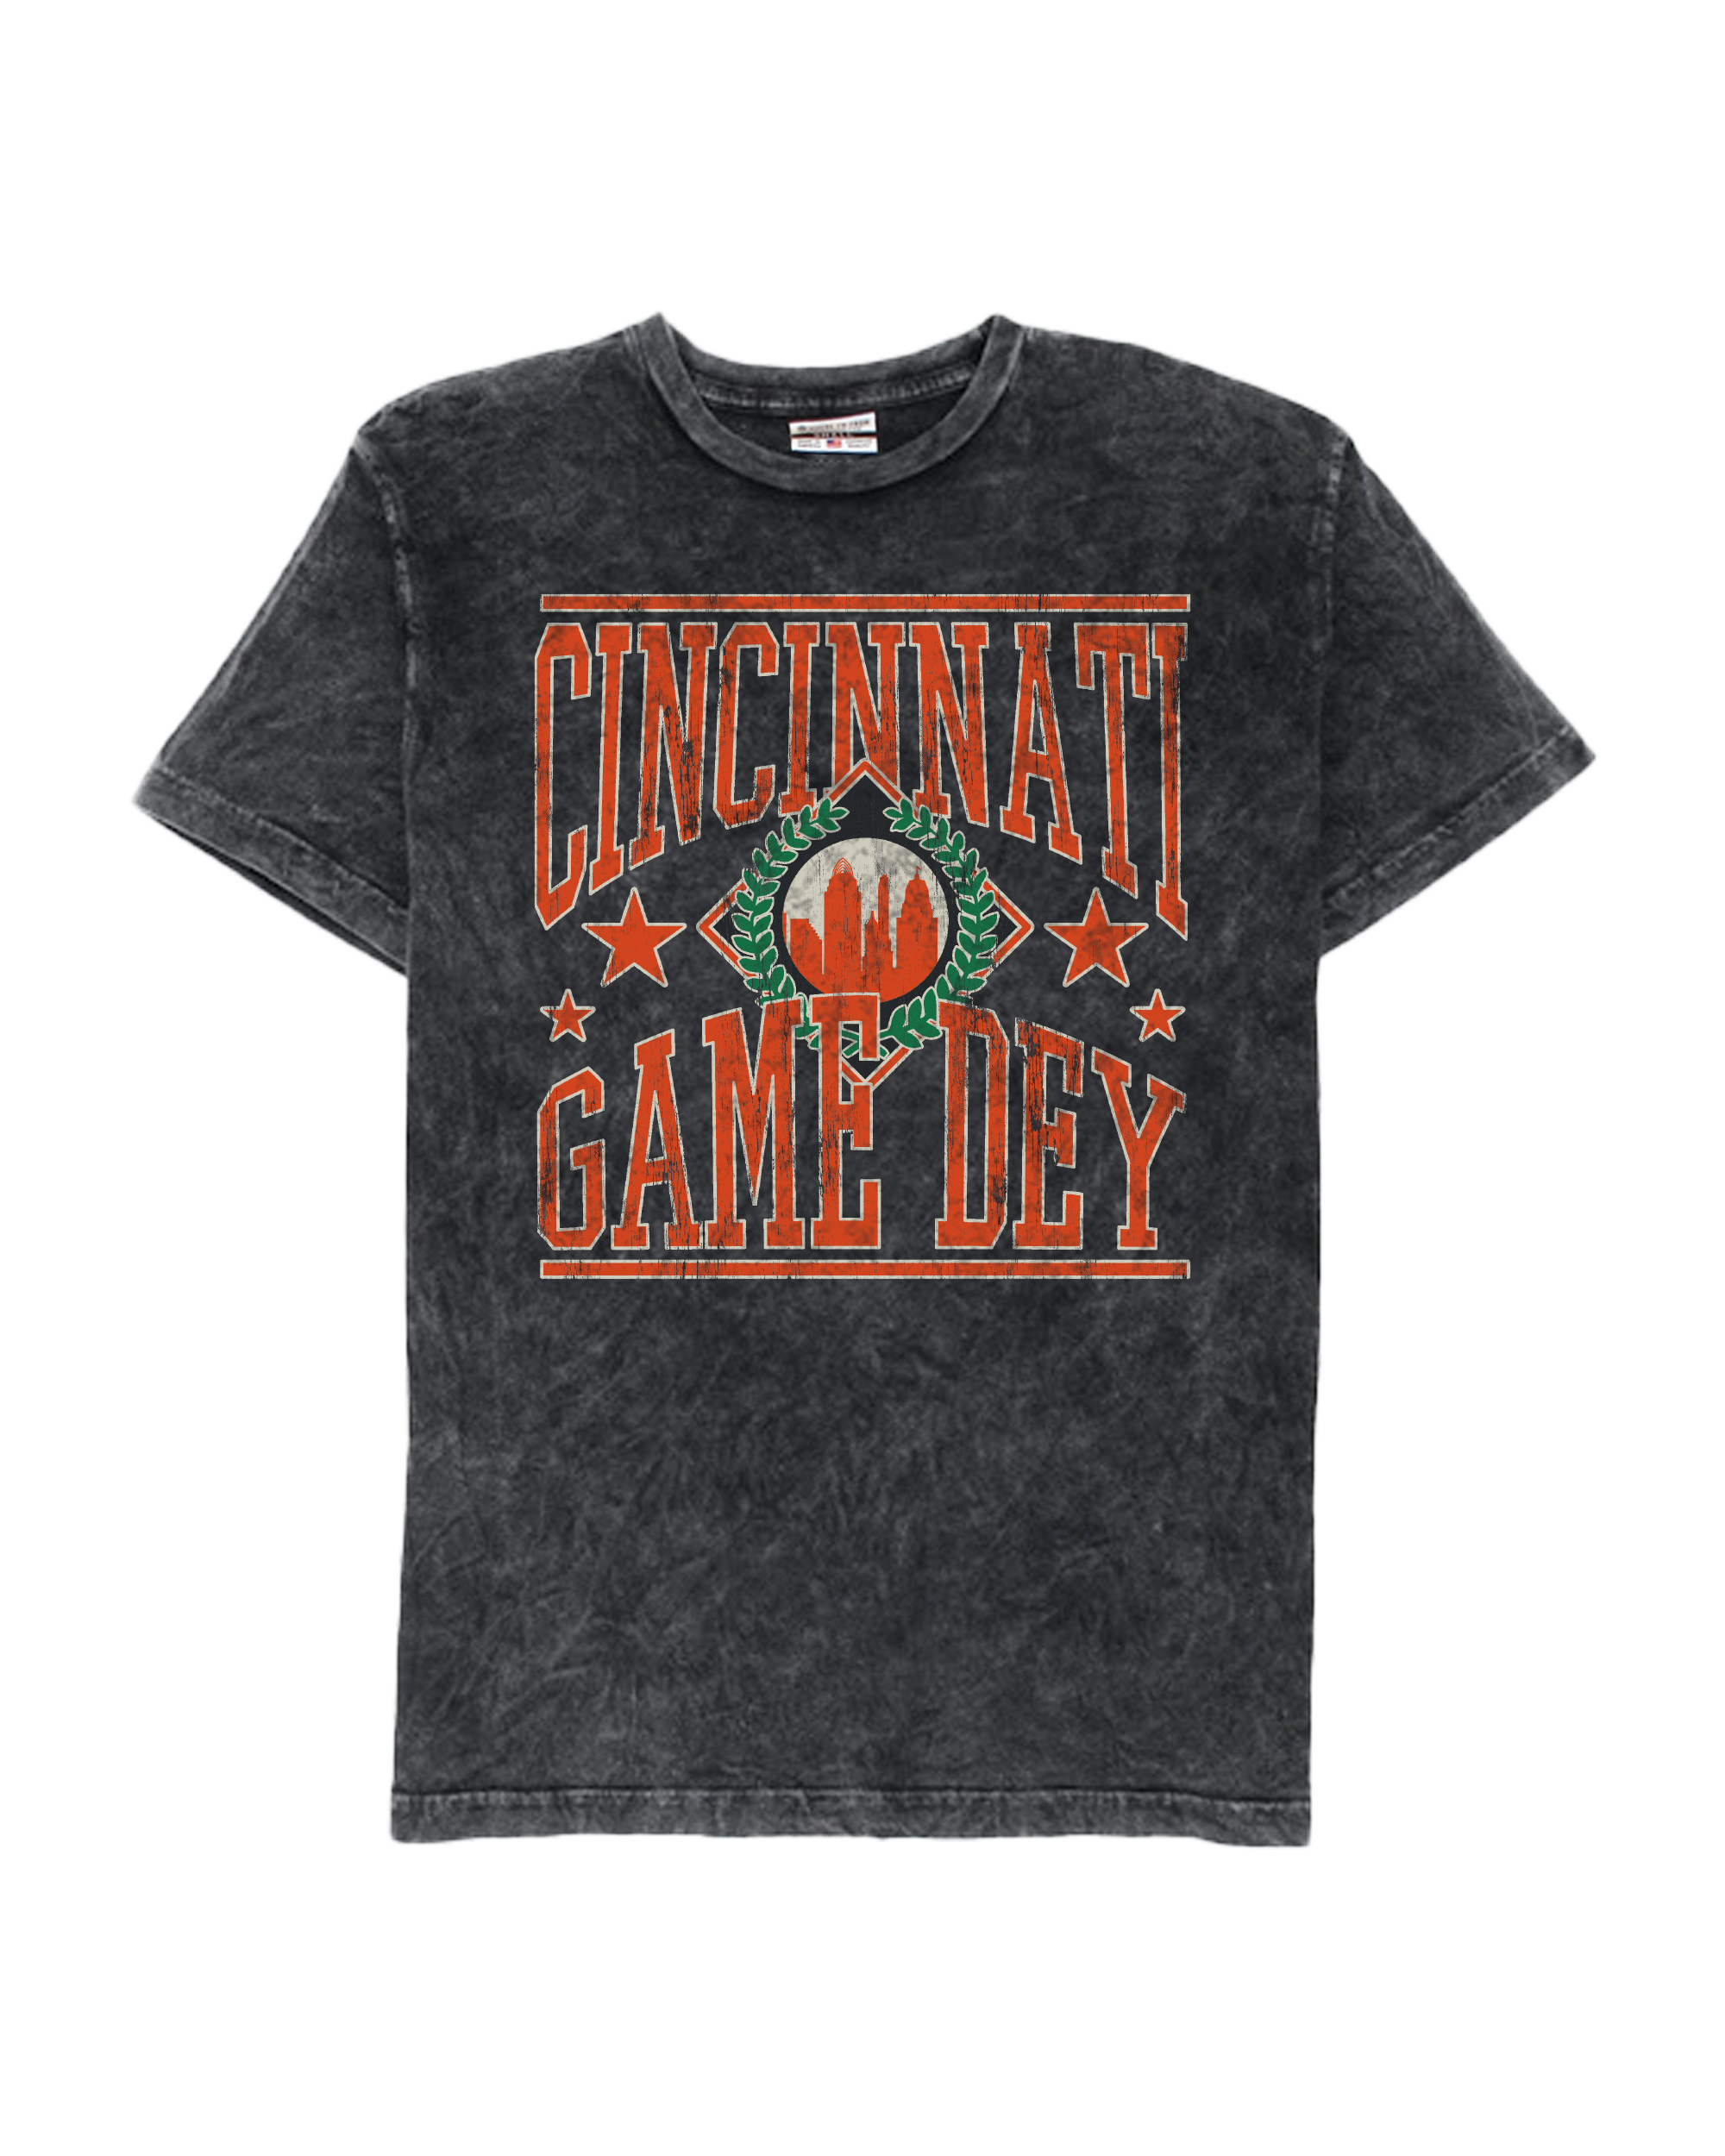 Cincinnati Game DEY Mineral Wash Crew T-Shirt